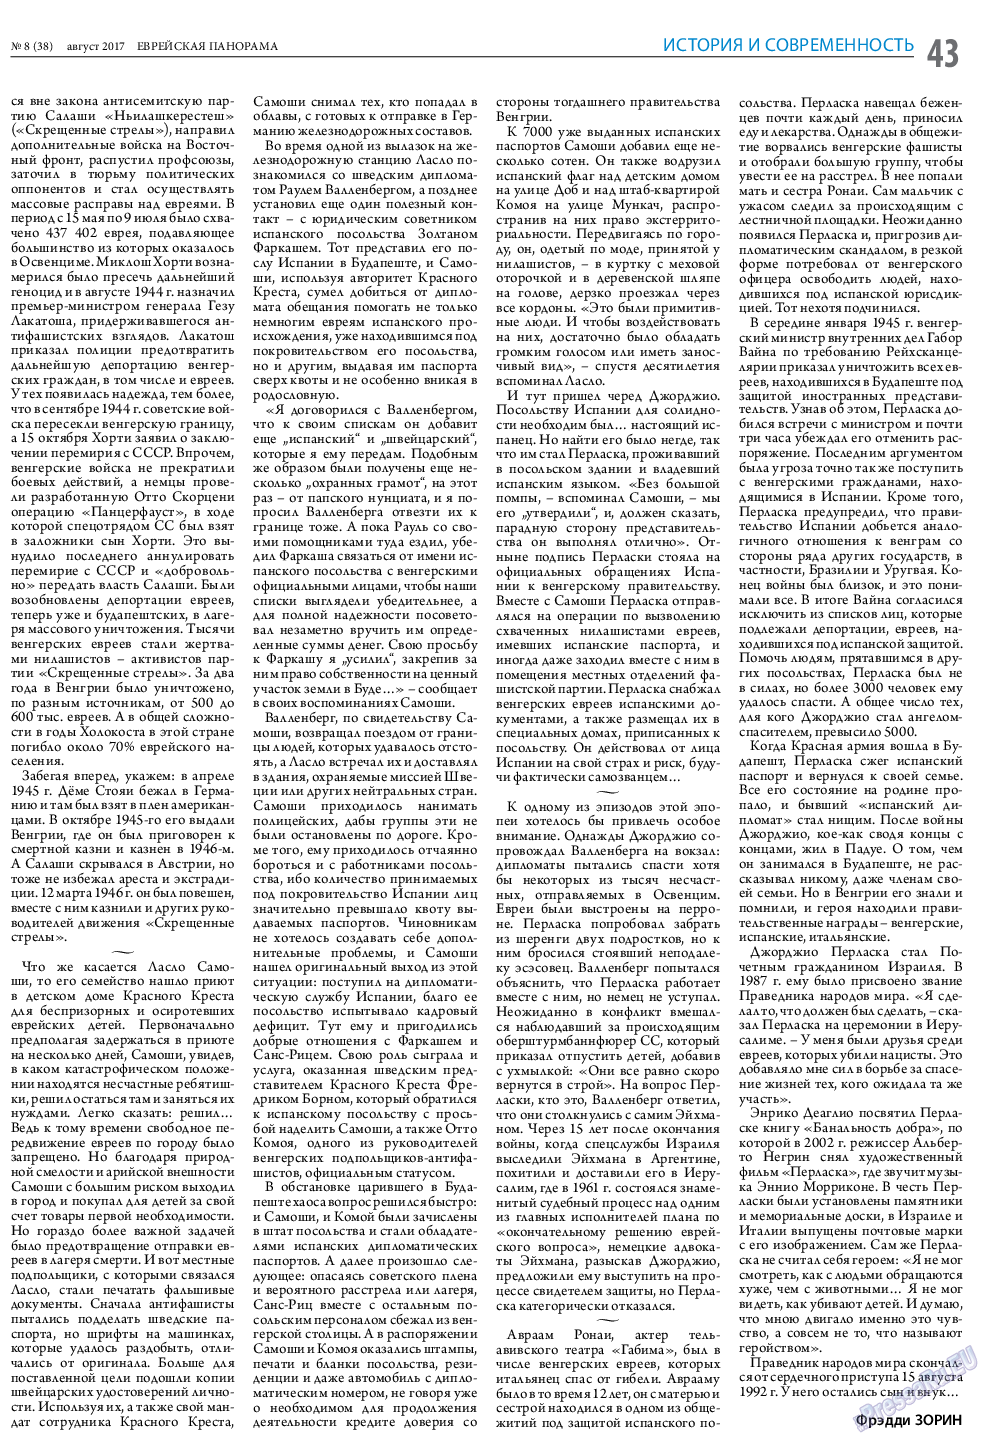 Еврейская панорама, газета. 2017 №8 стр.43